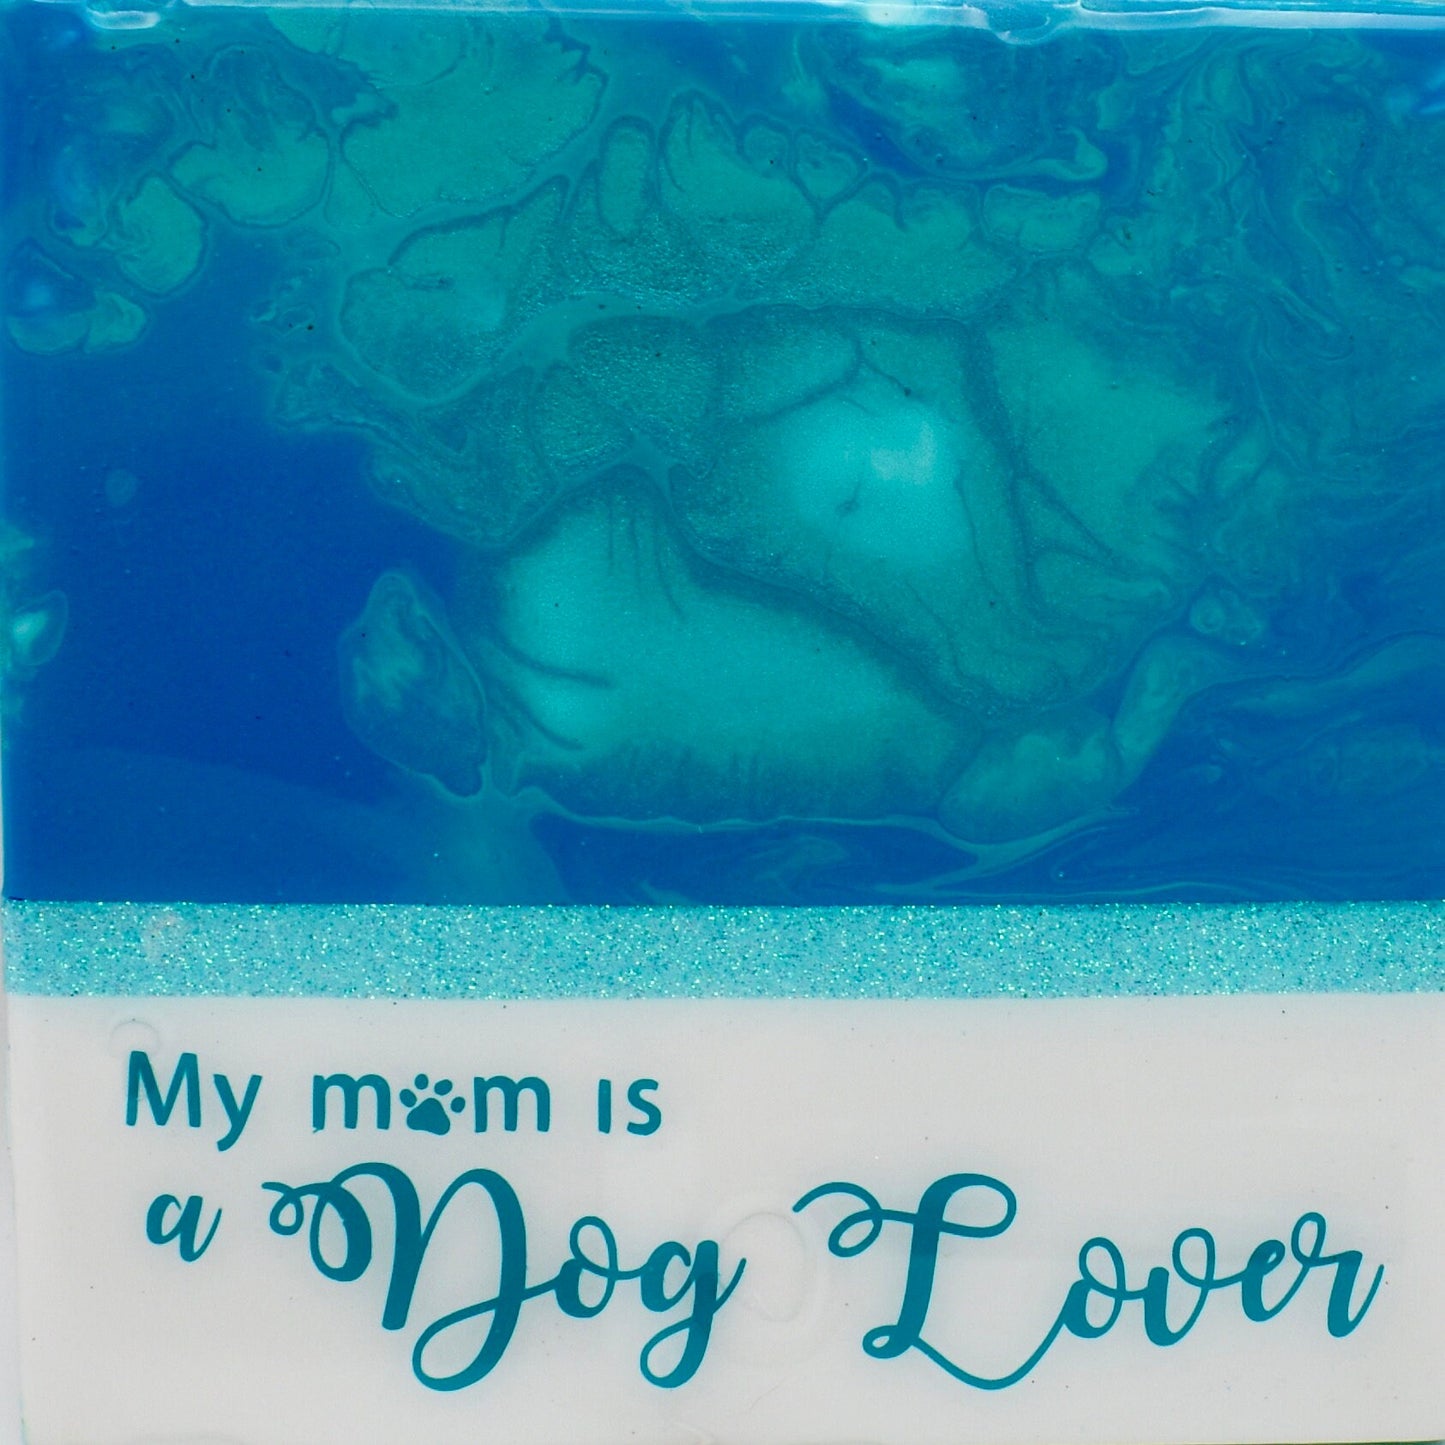 My Mom is a Dog Lover Ceramic Beverage Coaster Set